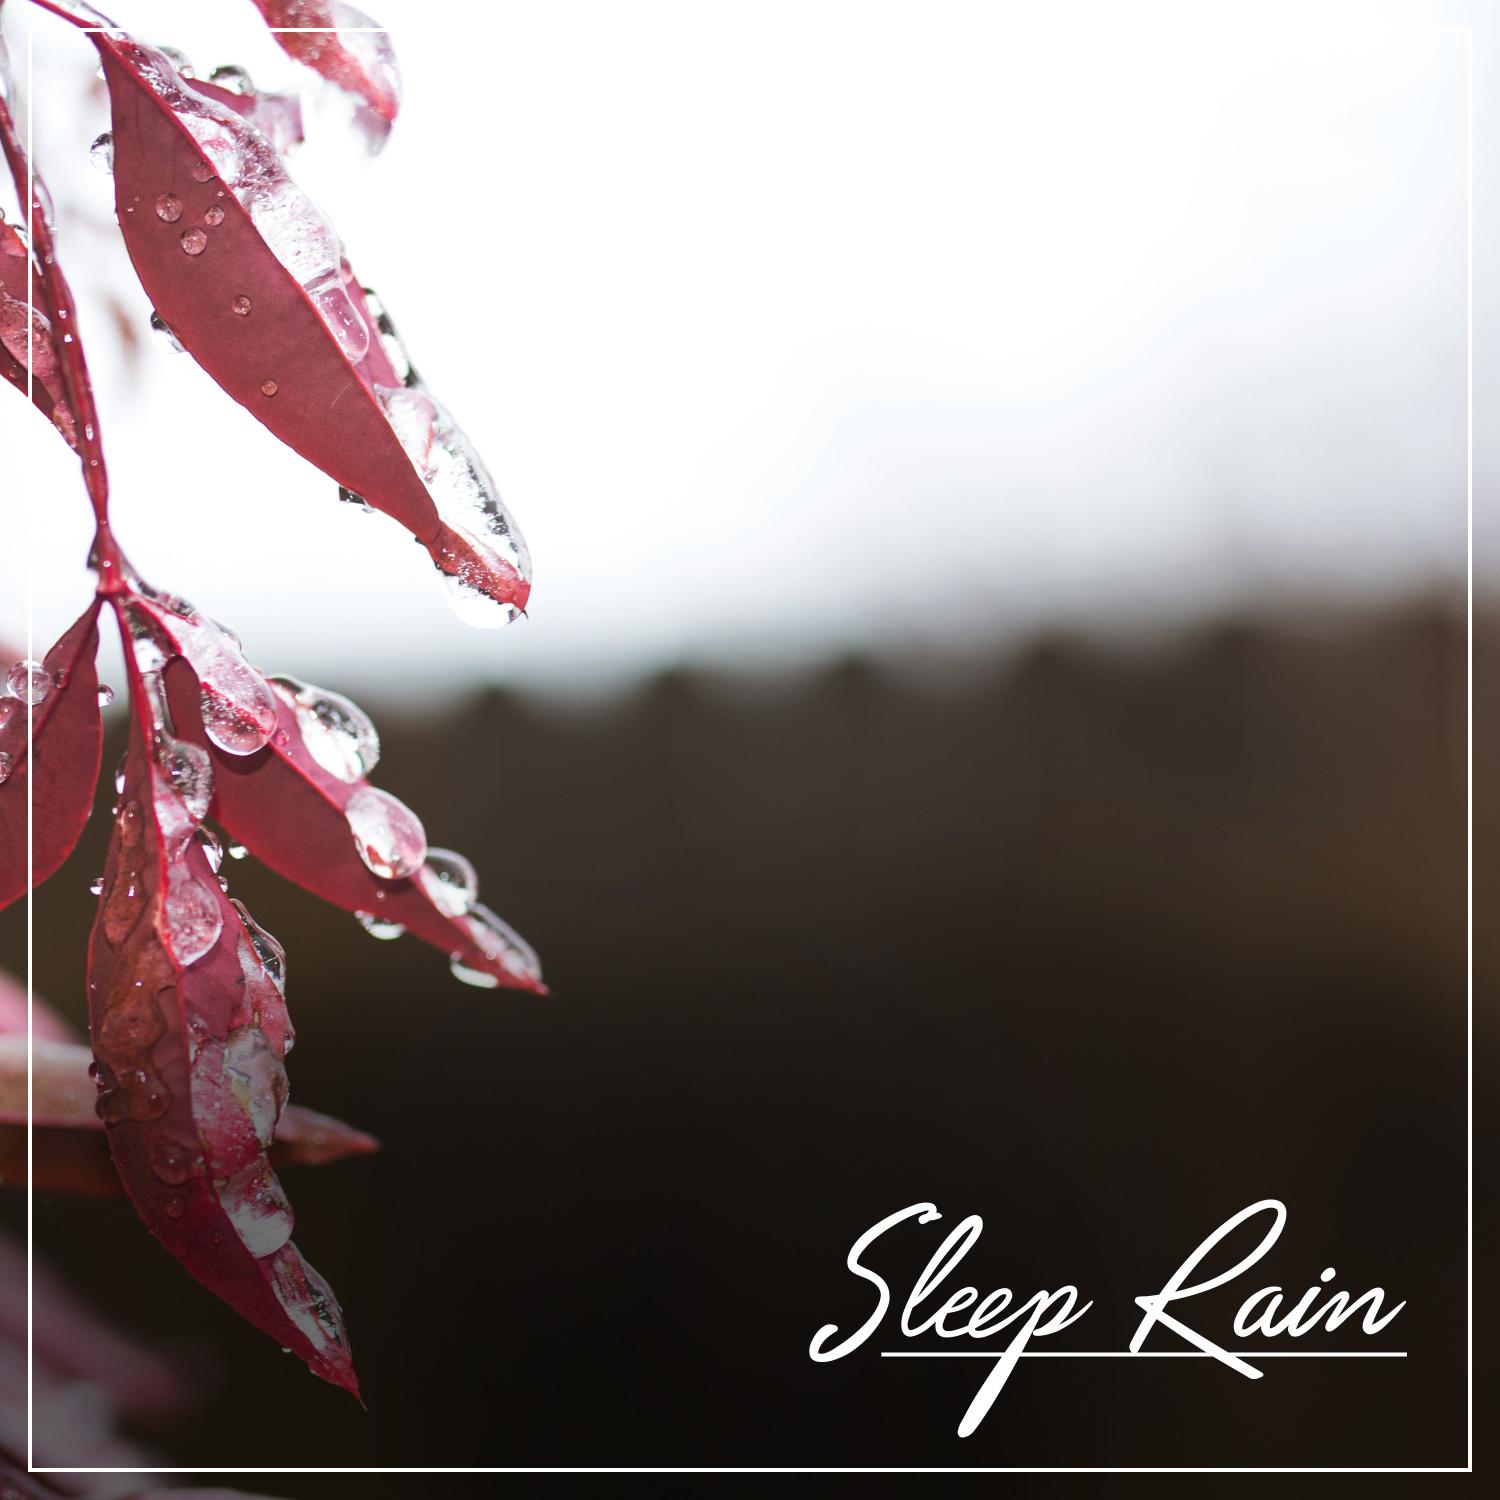 Rain Sounds for Meditation: Sleep Rain Compilation, Insomnia, Trouble Sleeping, Yoga, Focus, Study, Zen and Calming Rain